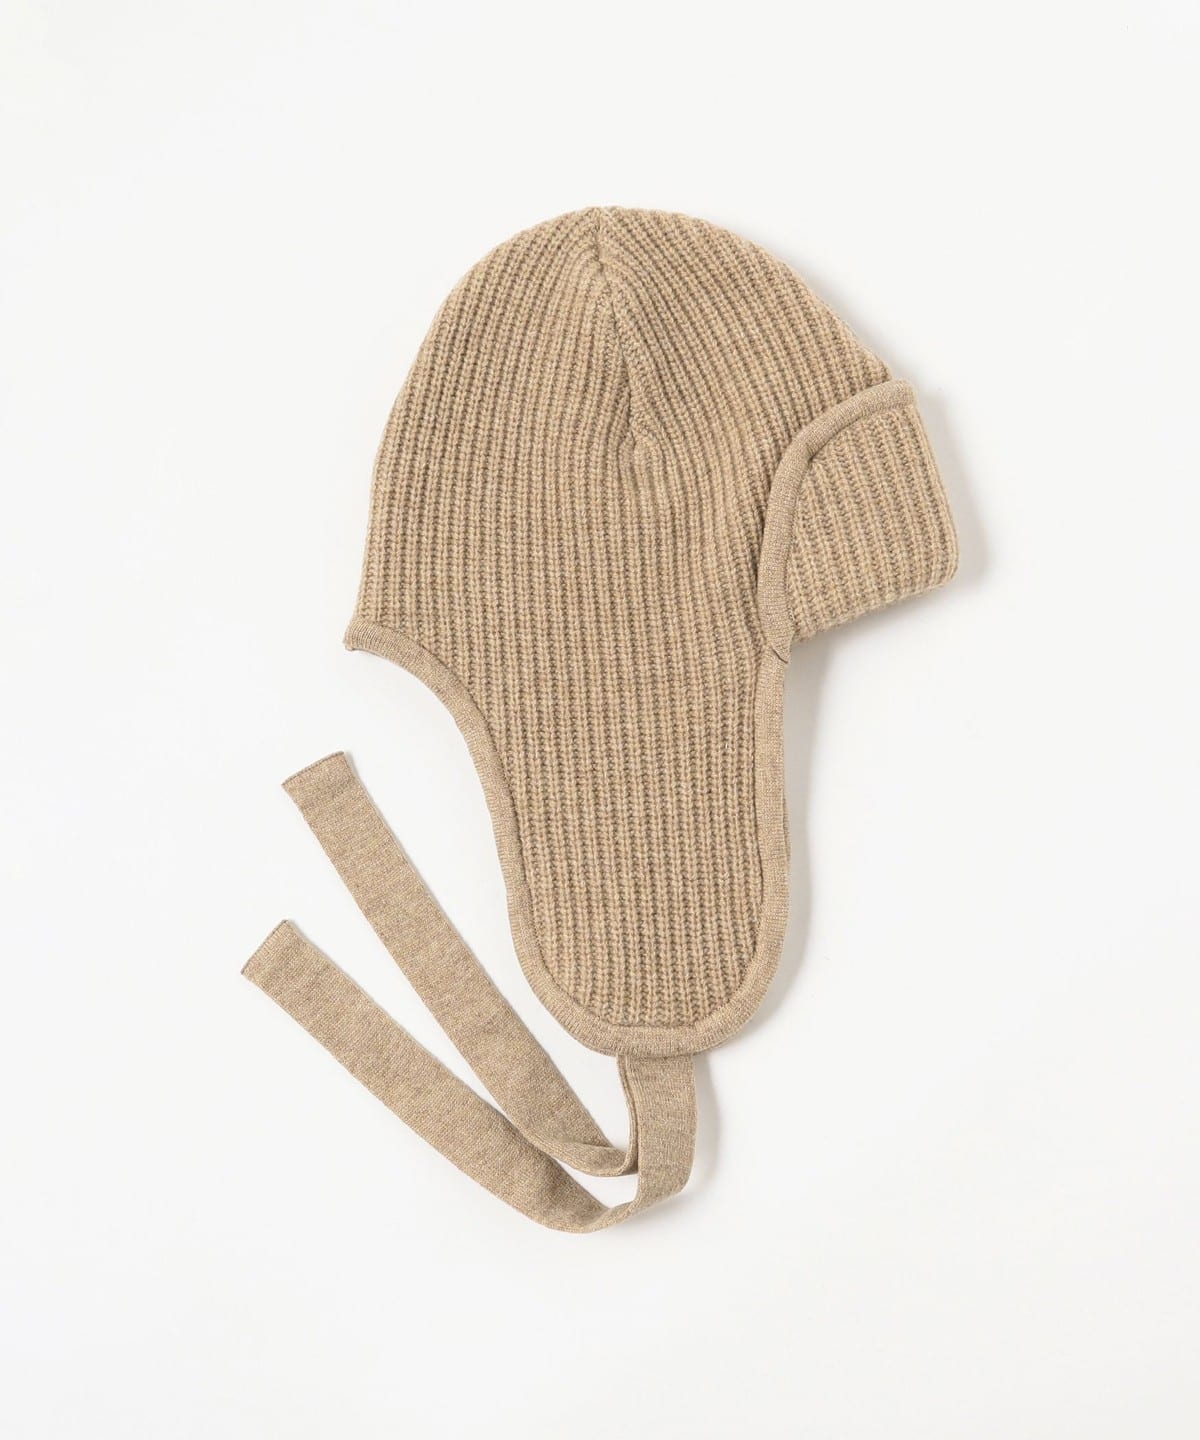 Ray BEAMS Ray BEAMS FUMIE=TANAKA / Ear cover cap (hat knit 